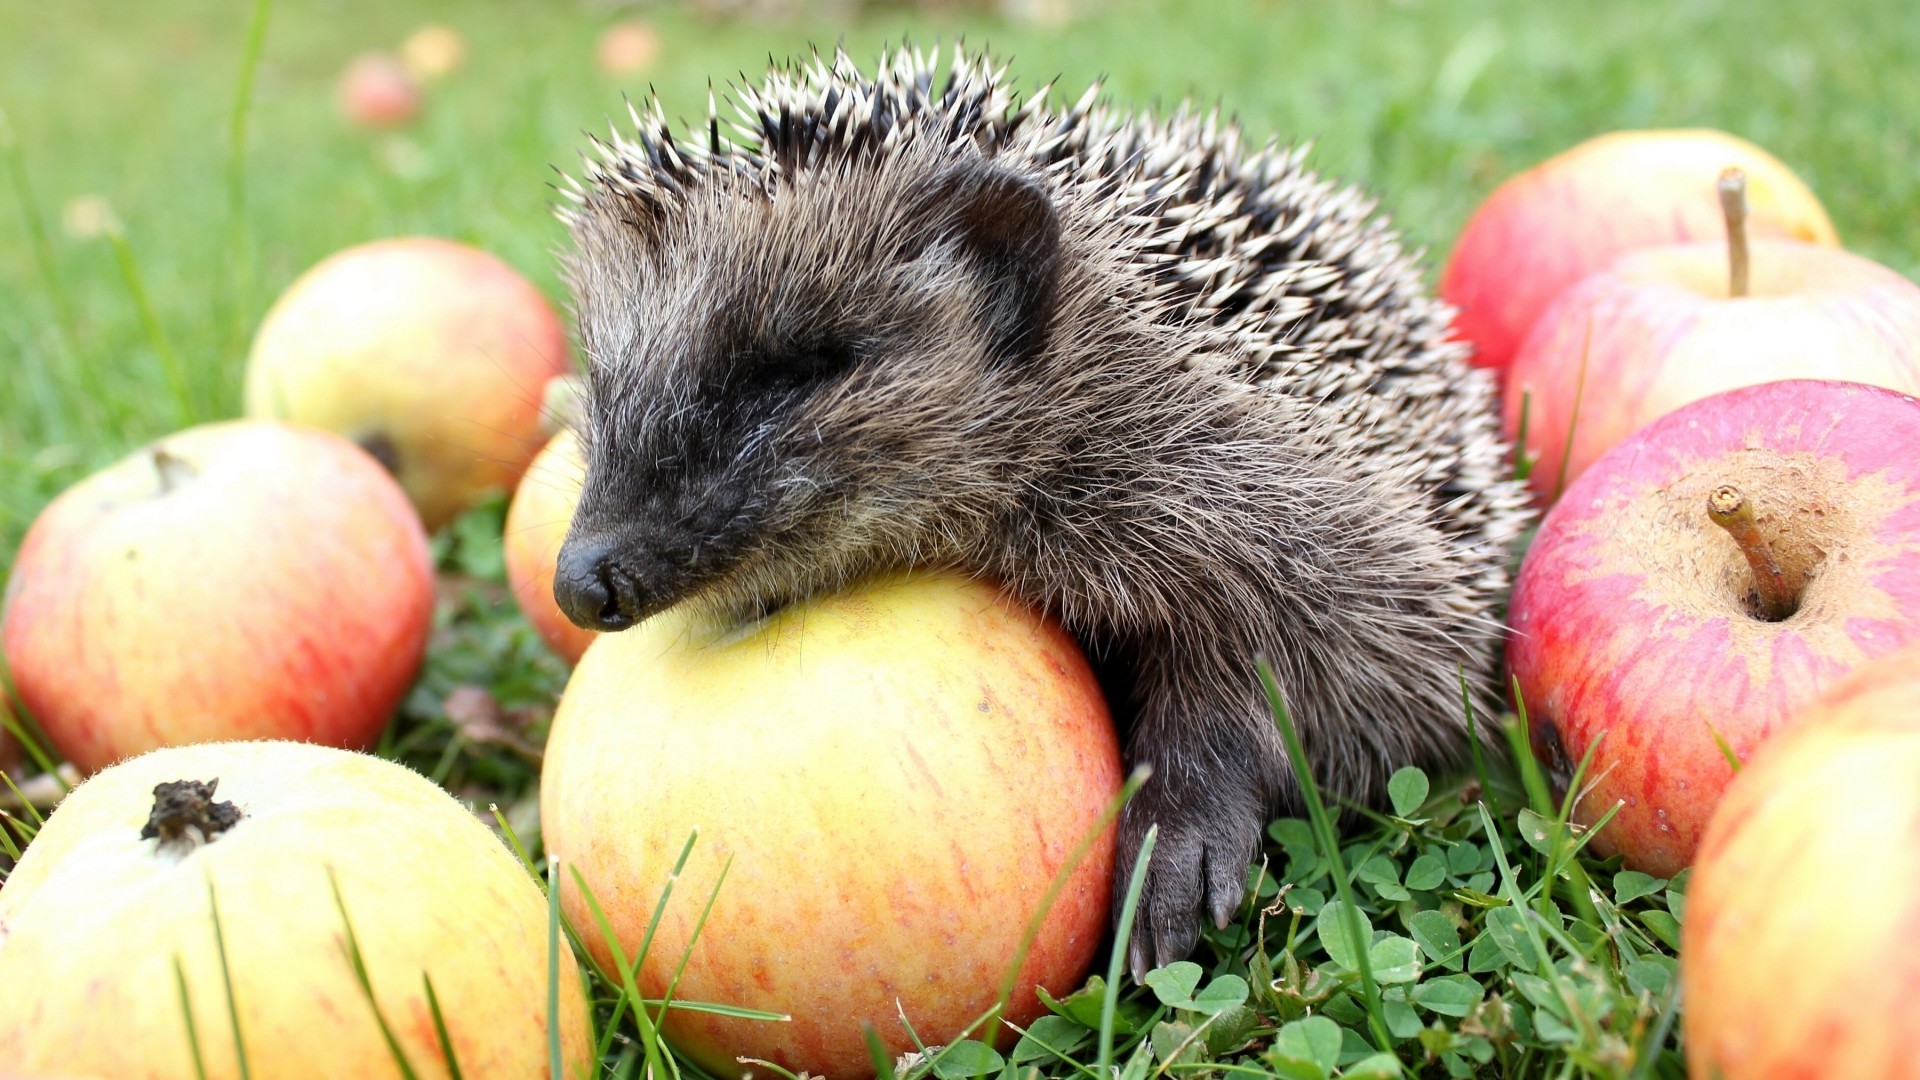 General 1920x1080 hedgehog animals food apples mammals fruit outdoors